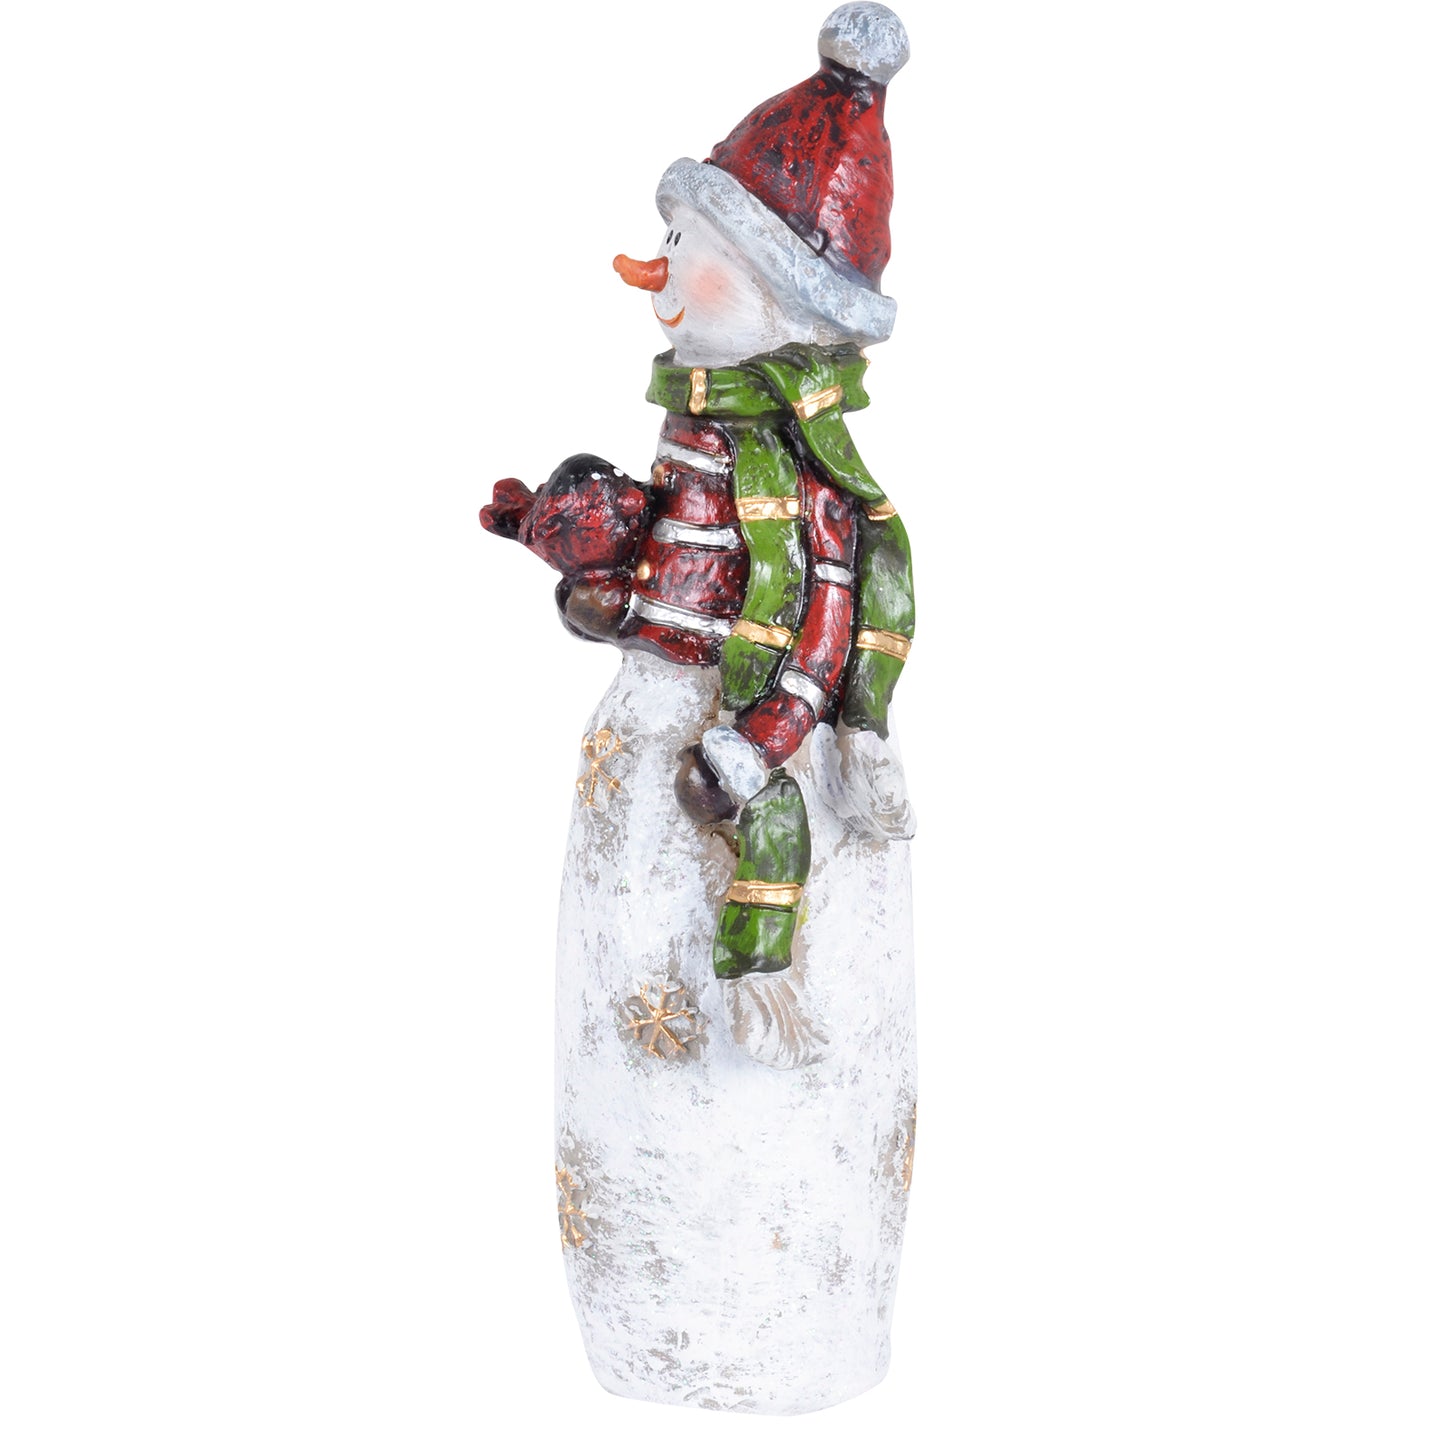 Mr Crimbo Snowman Ornament Resin Christmas Decoration - MrCrimbo.co.uk -XS4308 - 22cm -christmas decoration